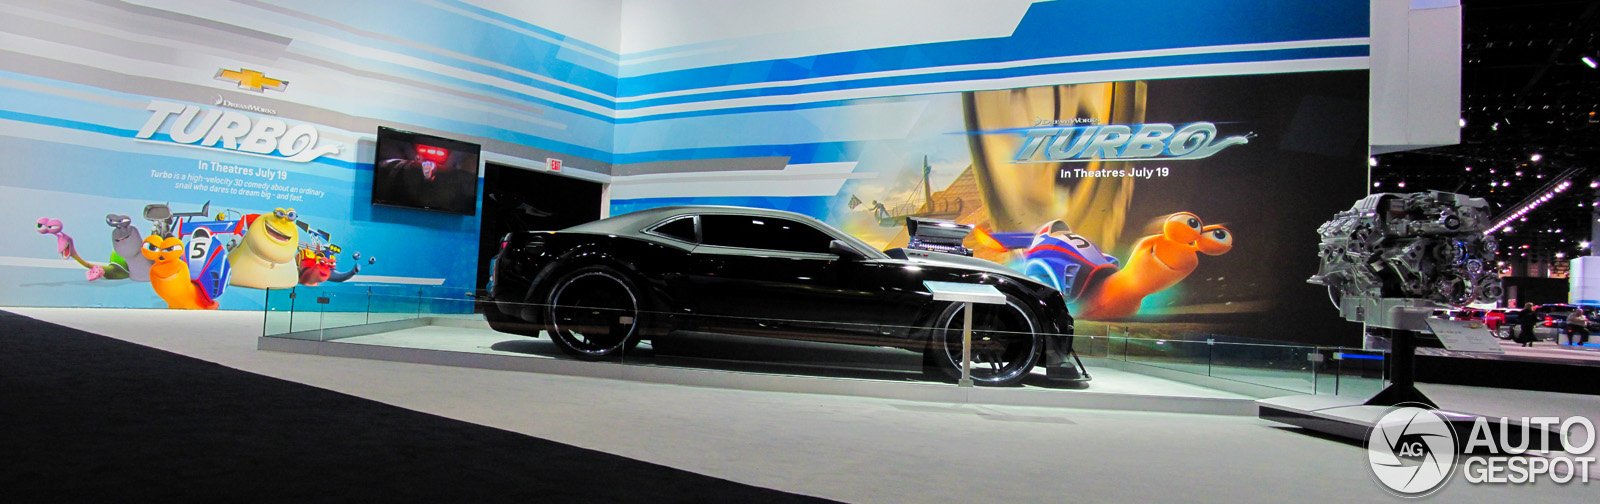 Chicago Motor Show 2013: Chevrolet "Turbo" Camaro Coupe